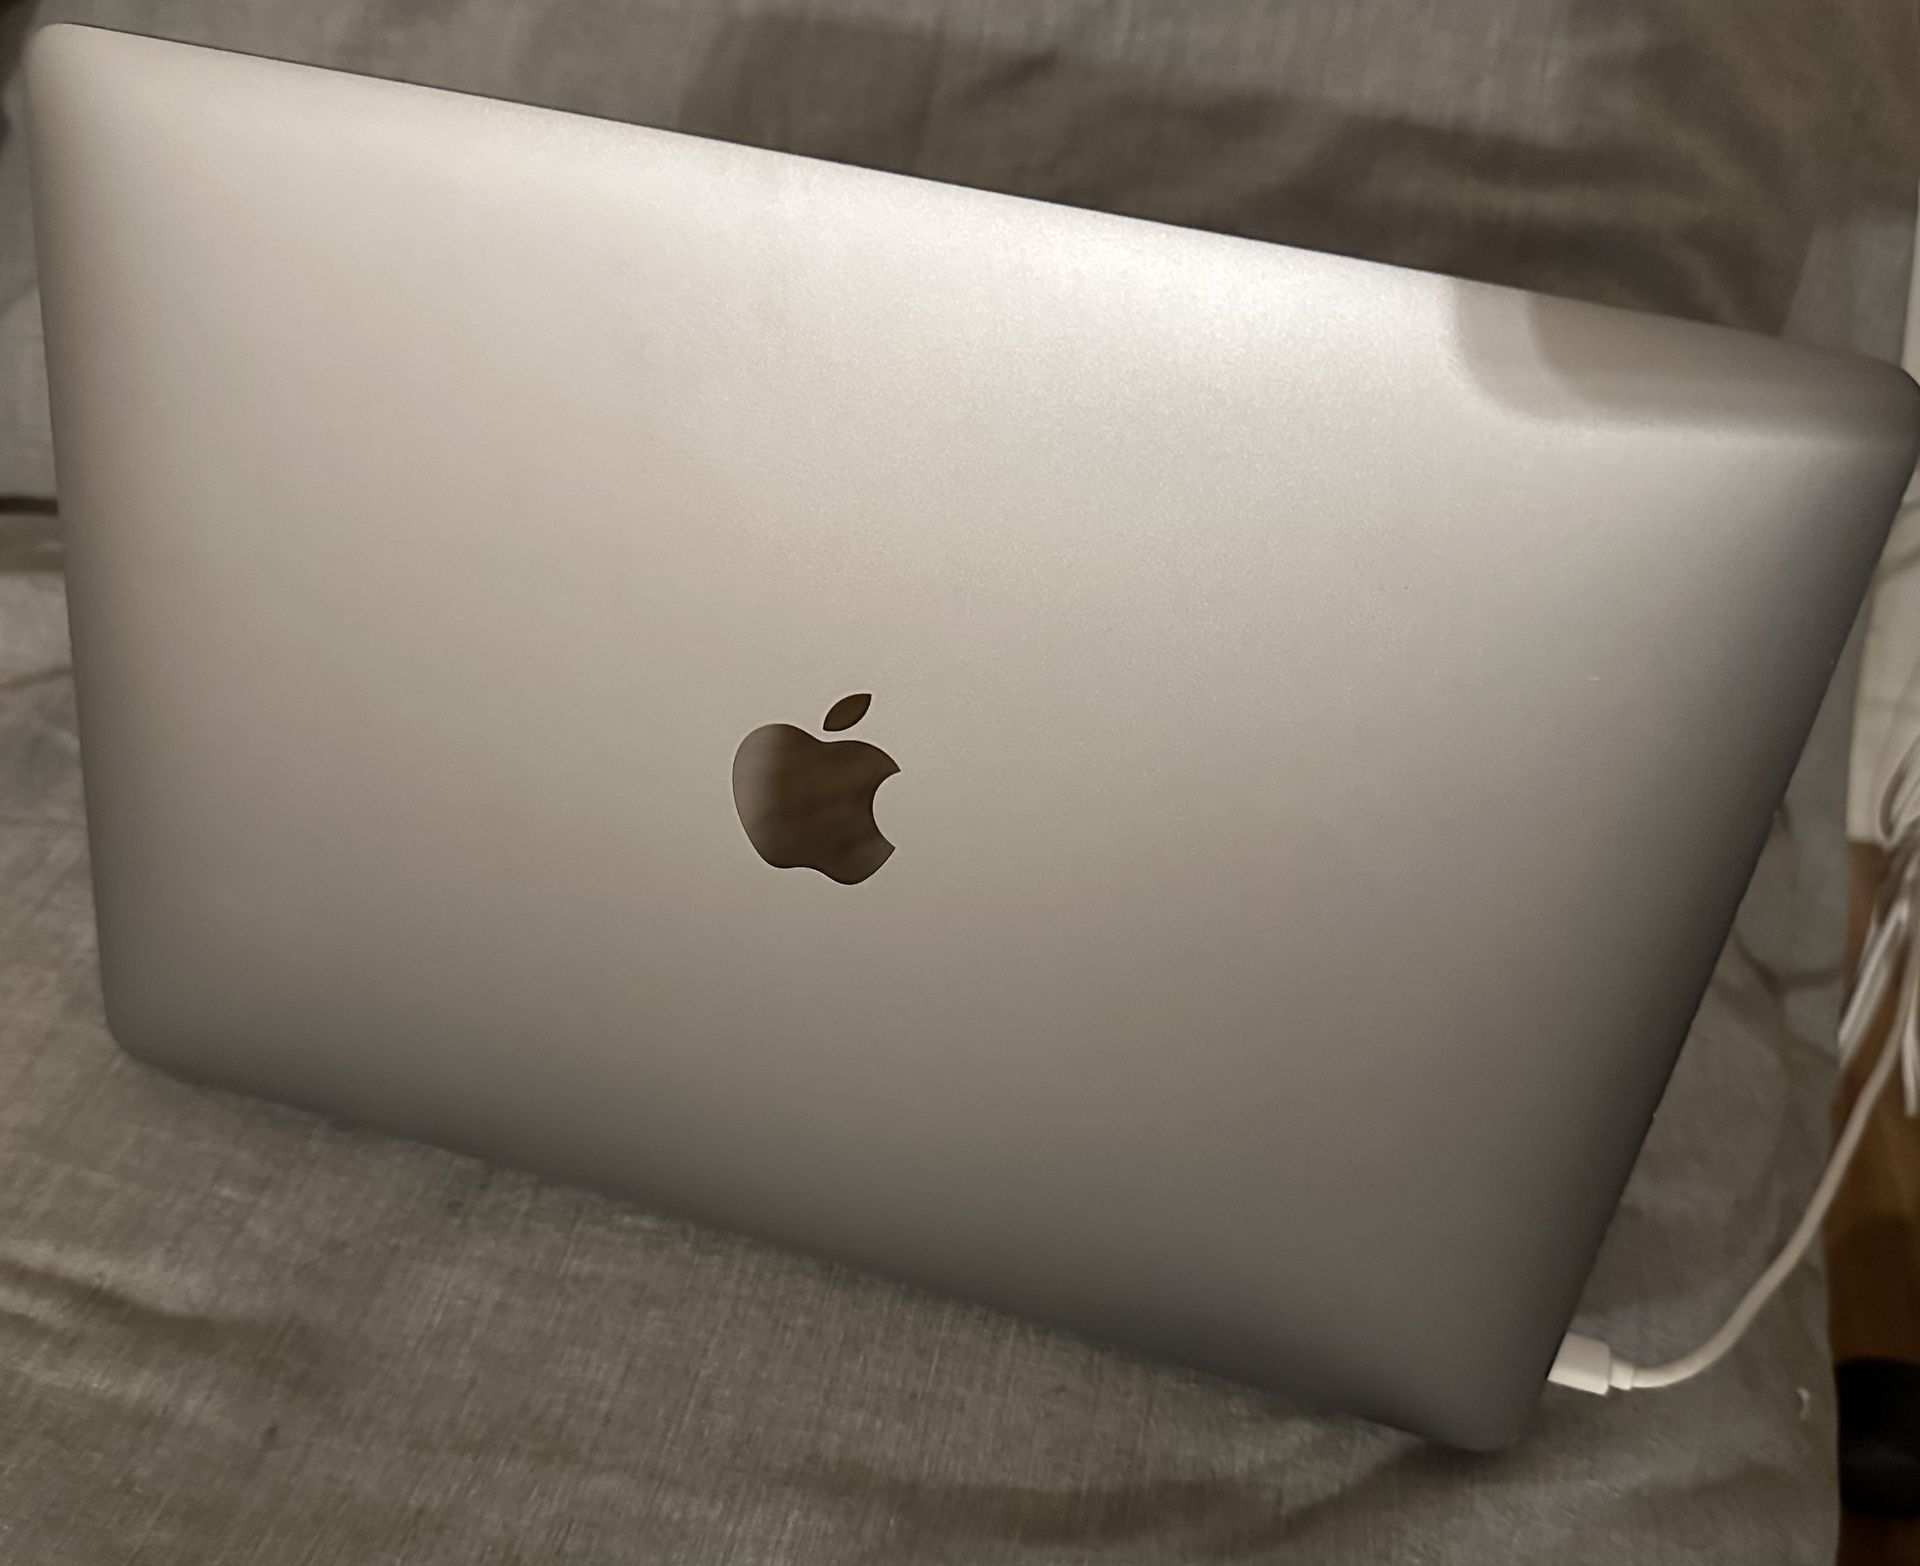 Apple MacBook Air (13-inch Retina display, 1.6GHz dual-core Intel Core i5, 128GB) - Space Gray